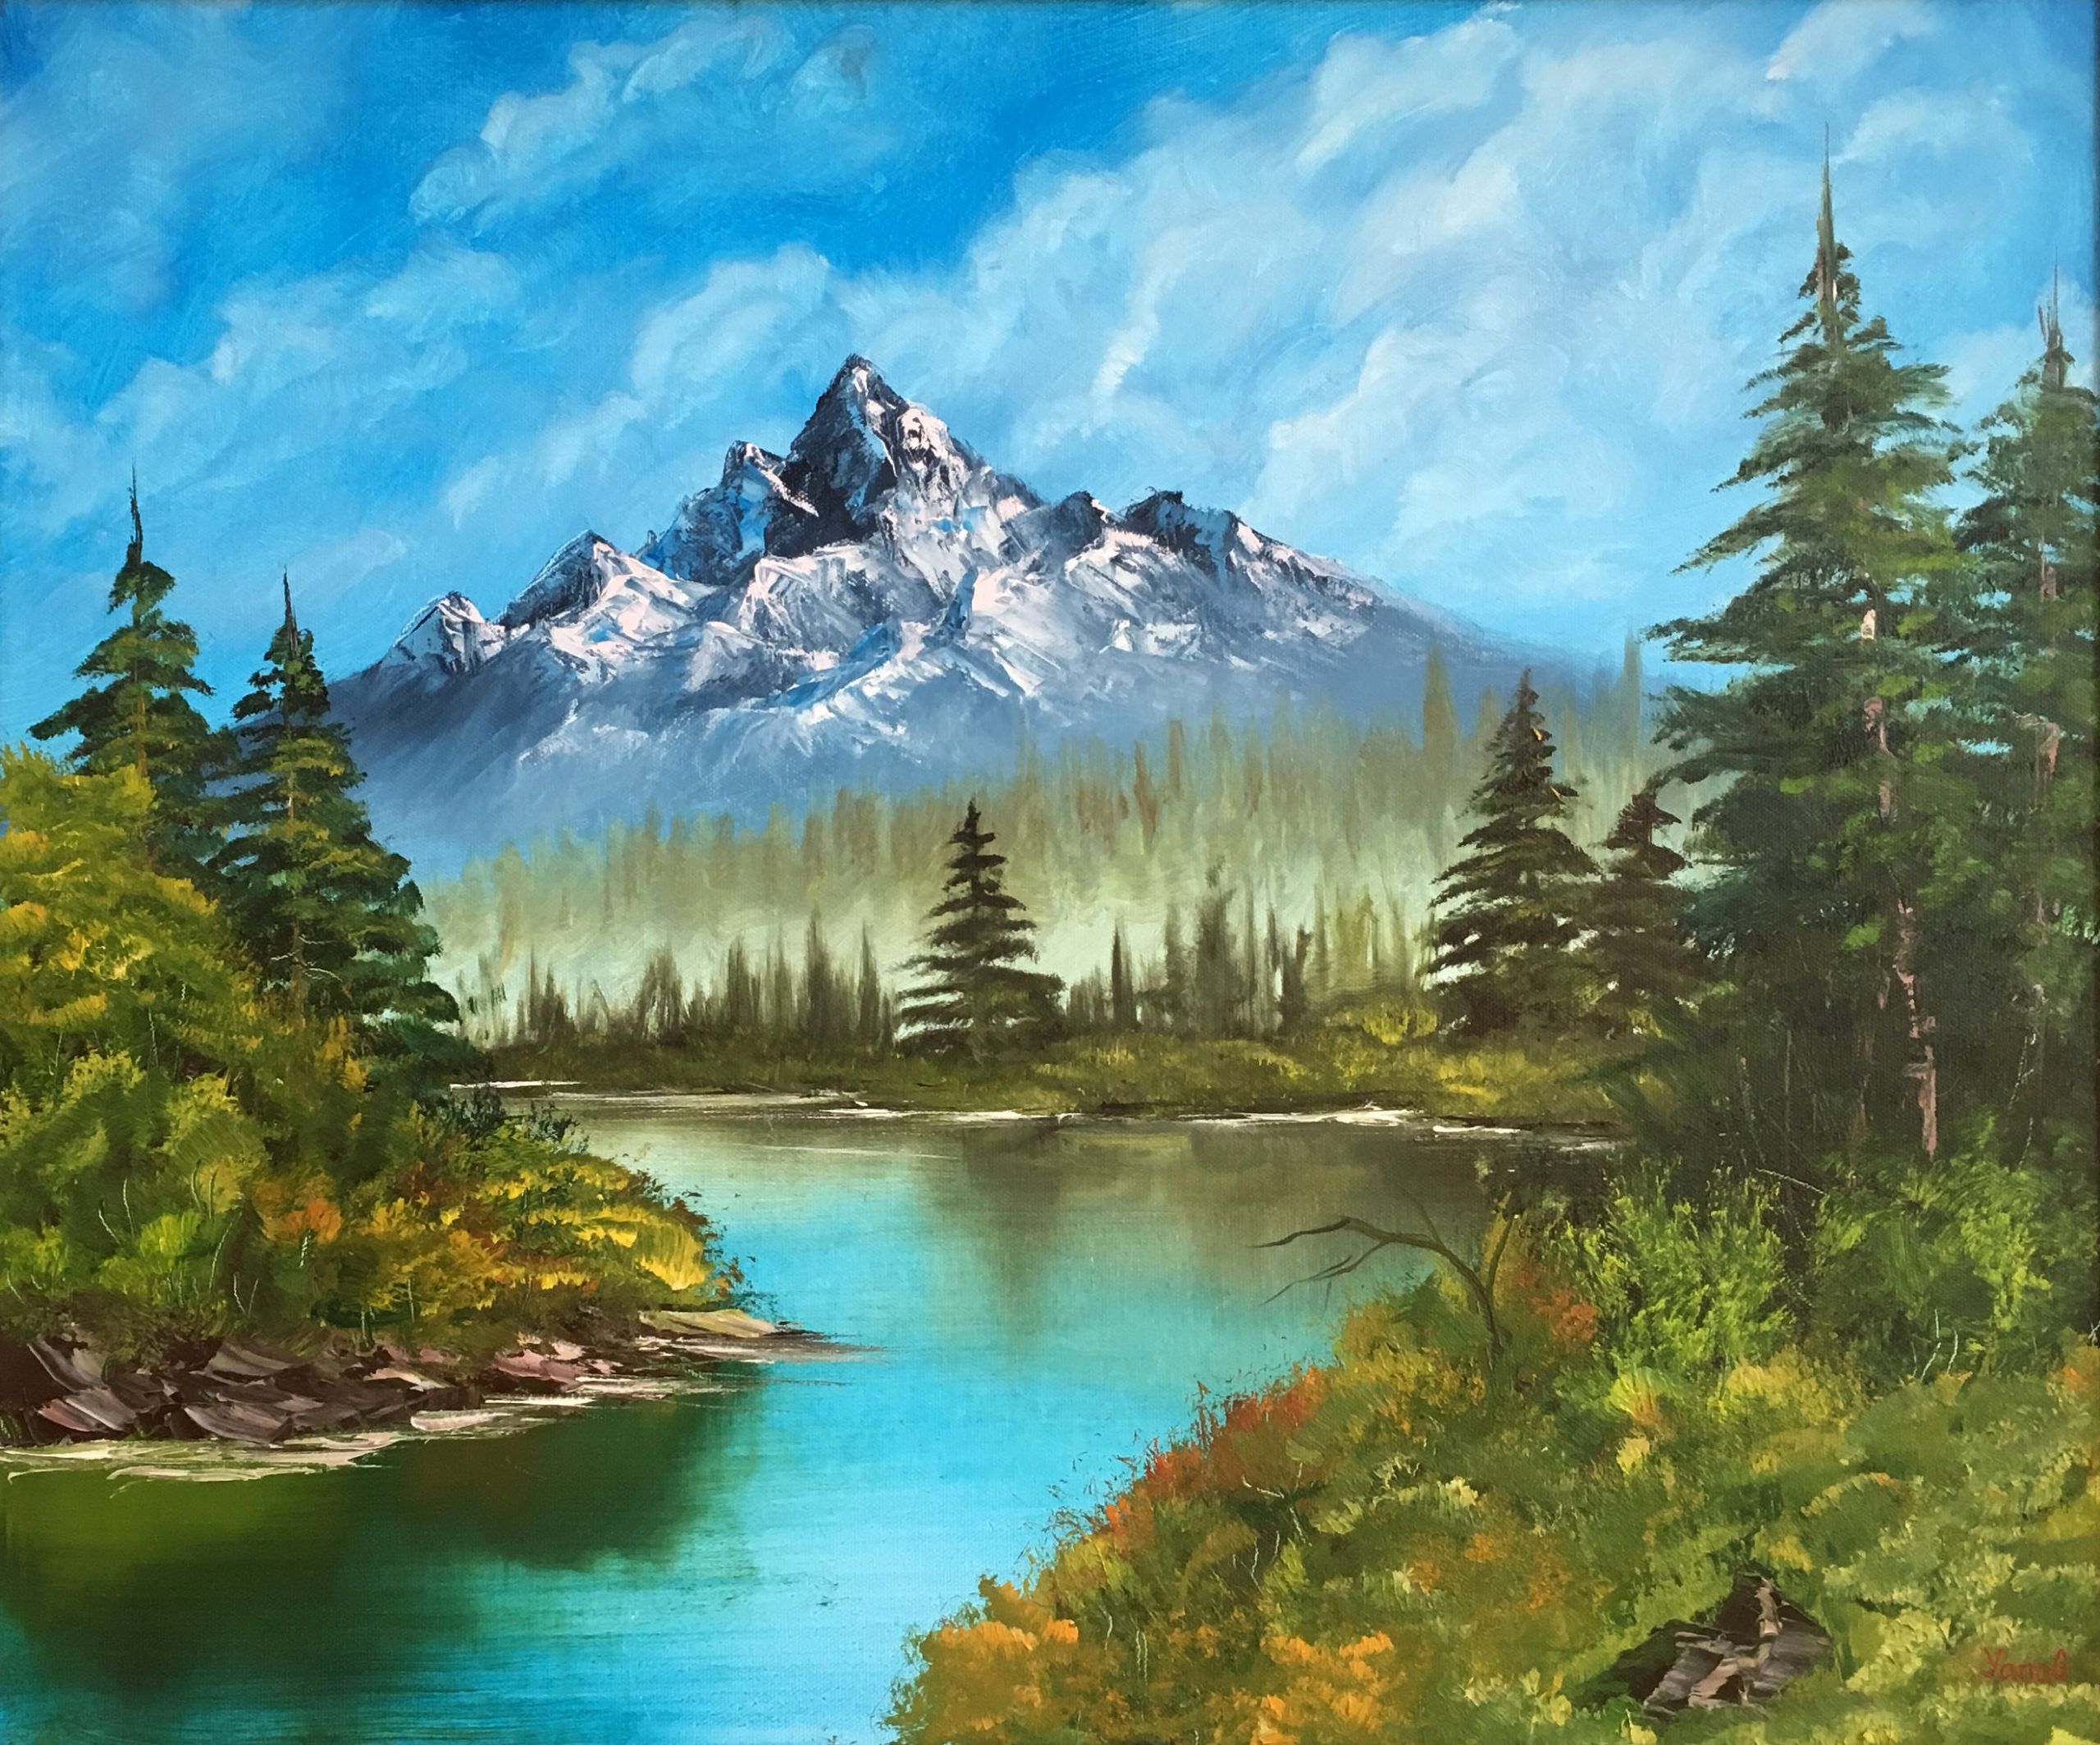 Bob Ross Landscape Paintings
 Landscape painting Original Oil on canvas Bob Ross style